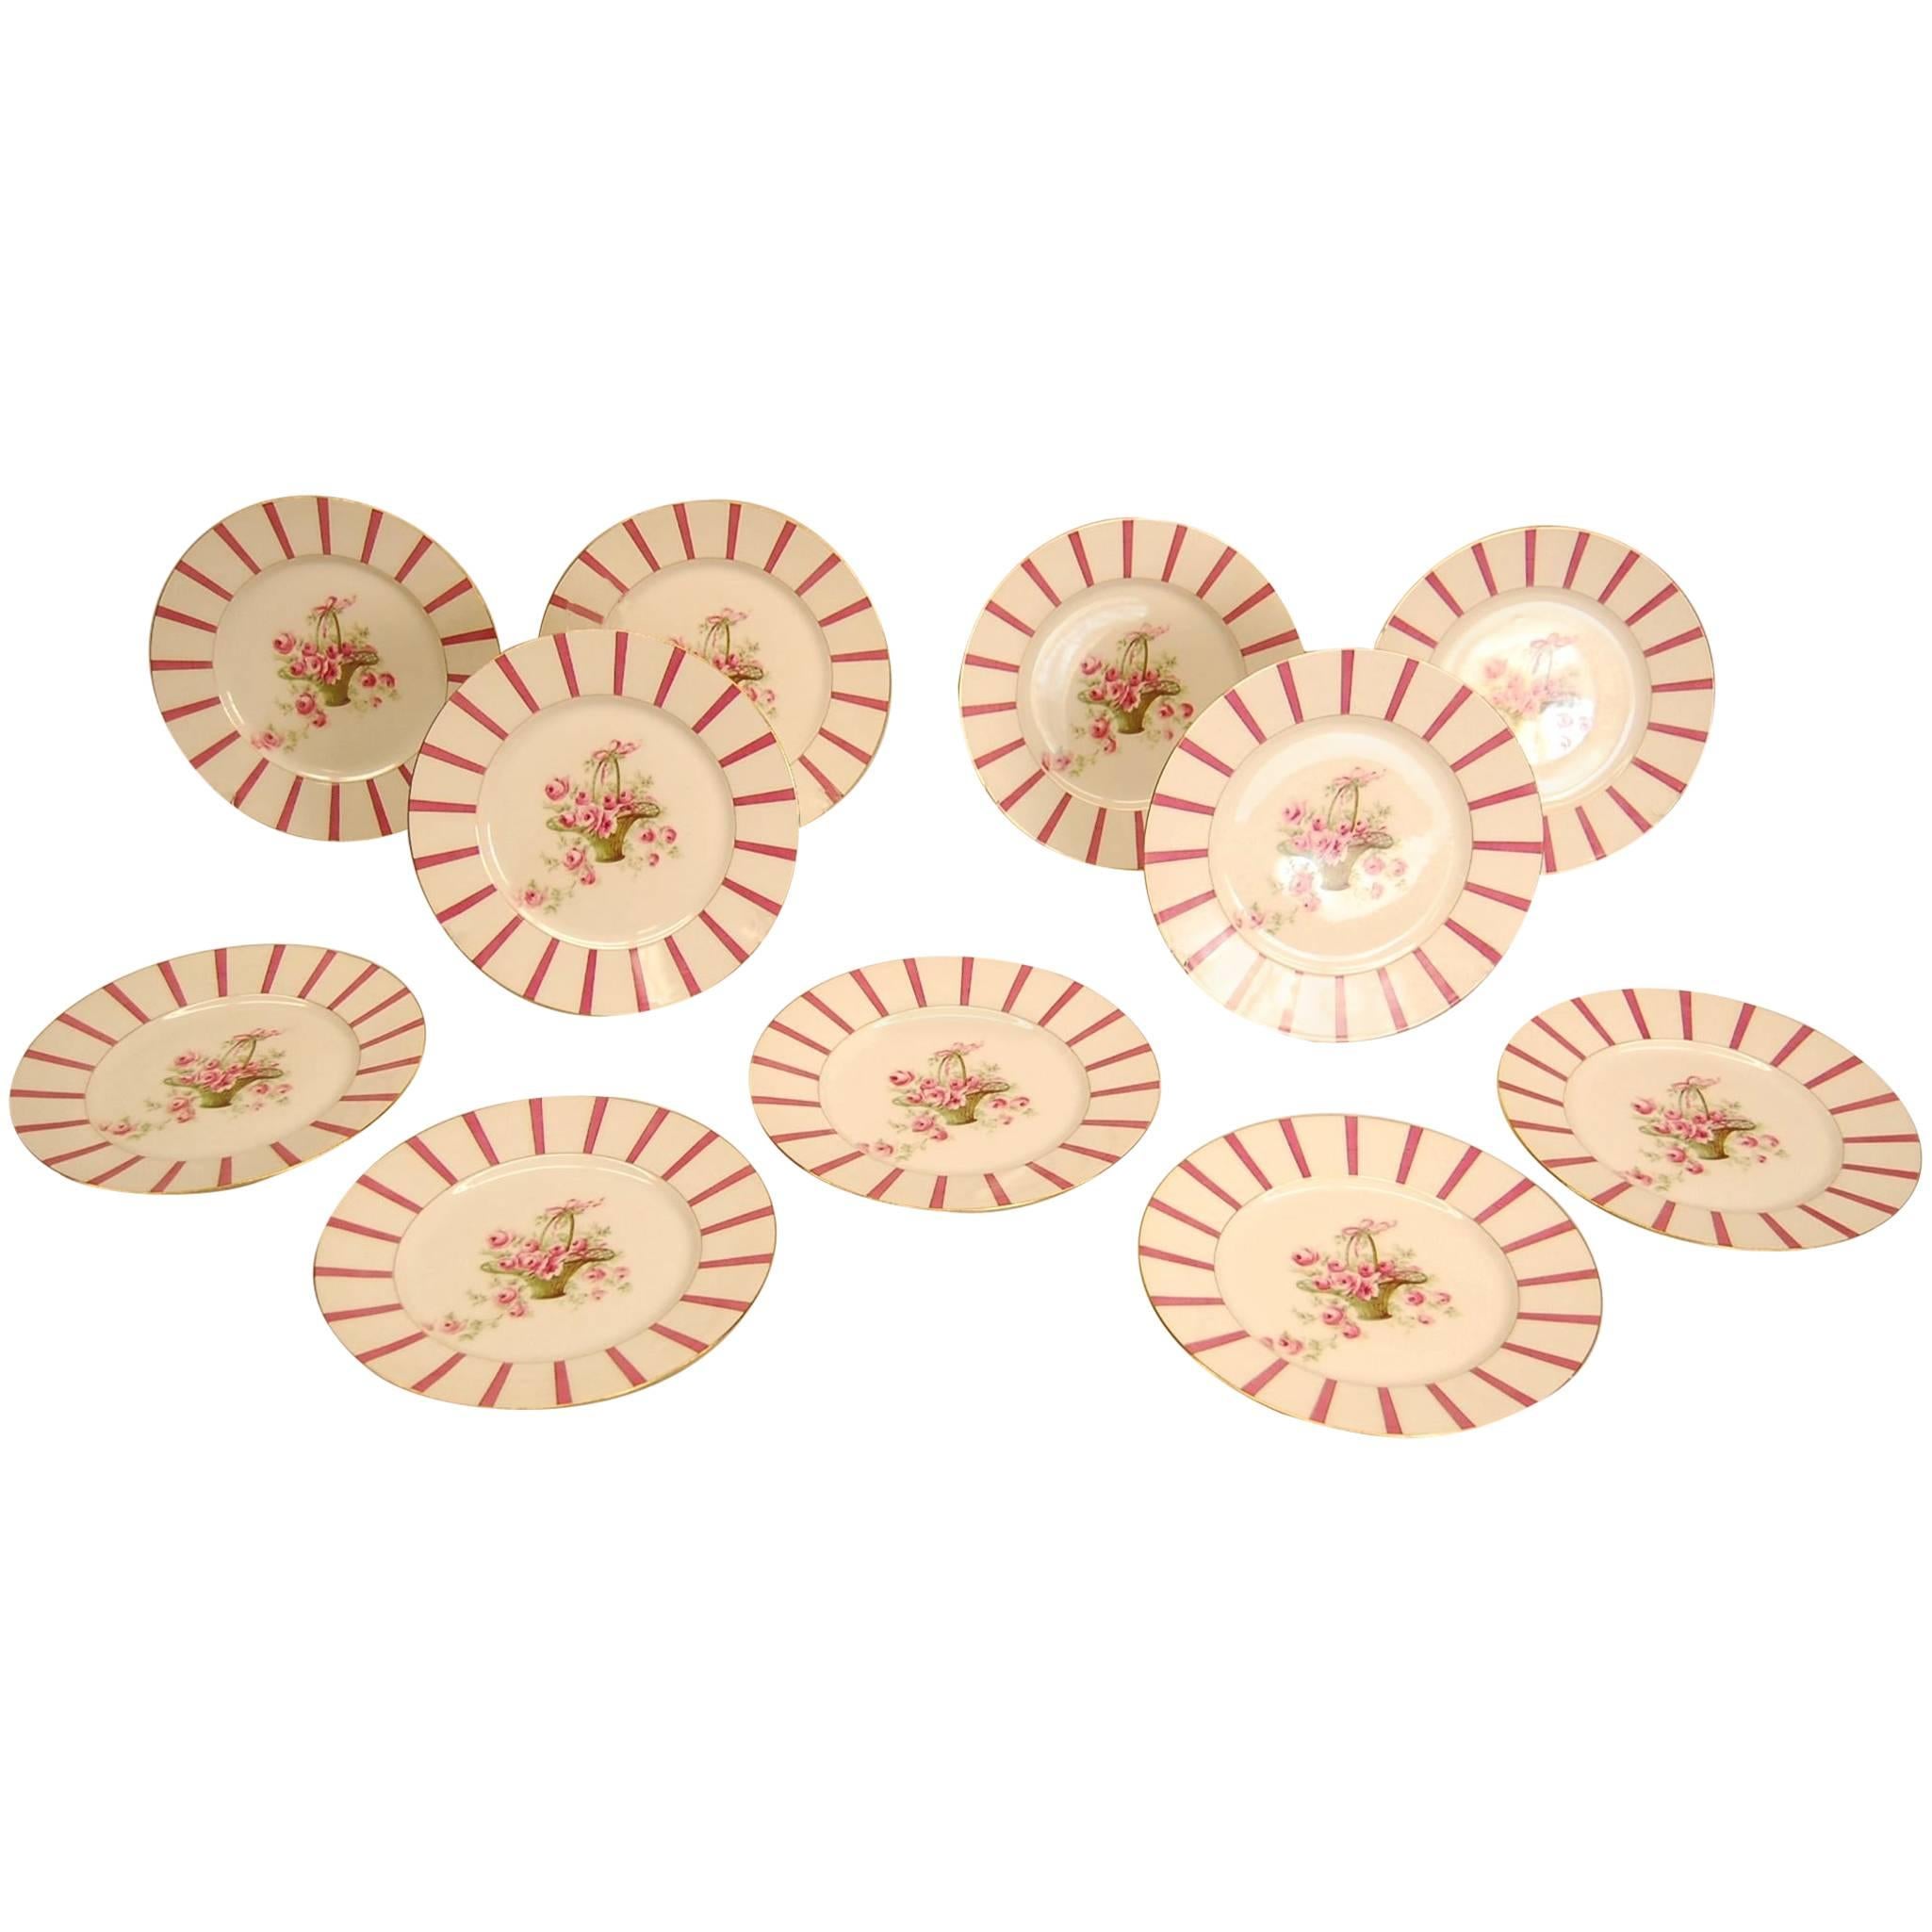 Set of 11 Limoges Martin Porcelain Dinner Plates with Pink Roses and Edge Design